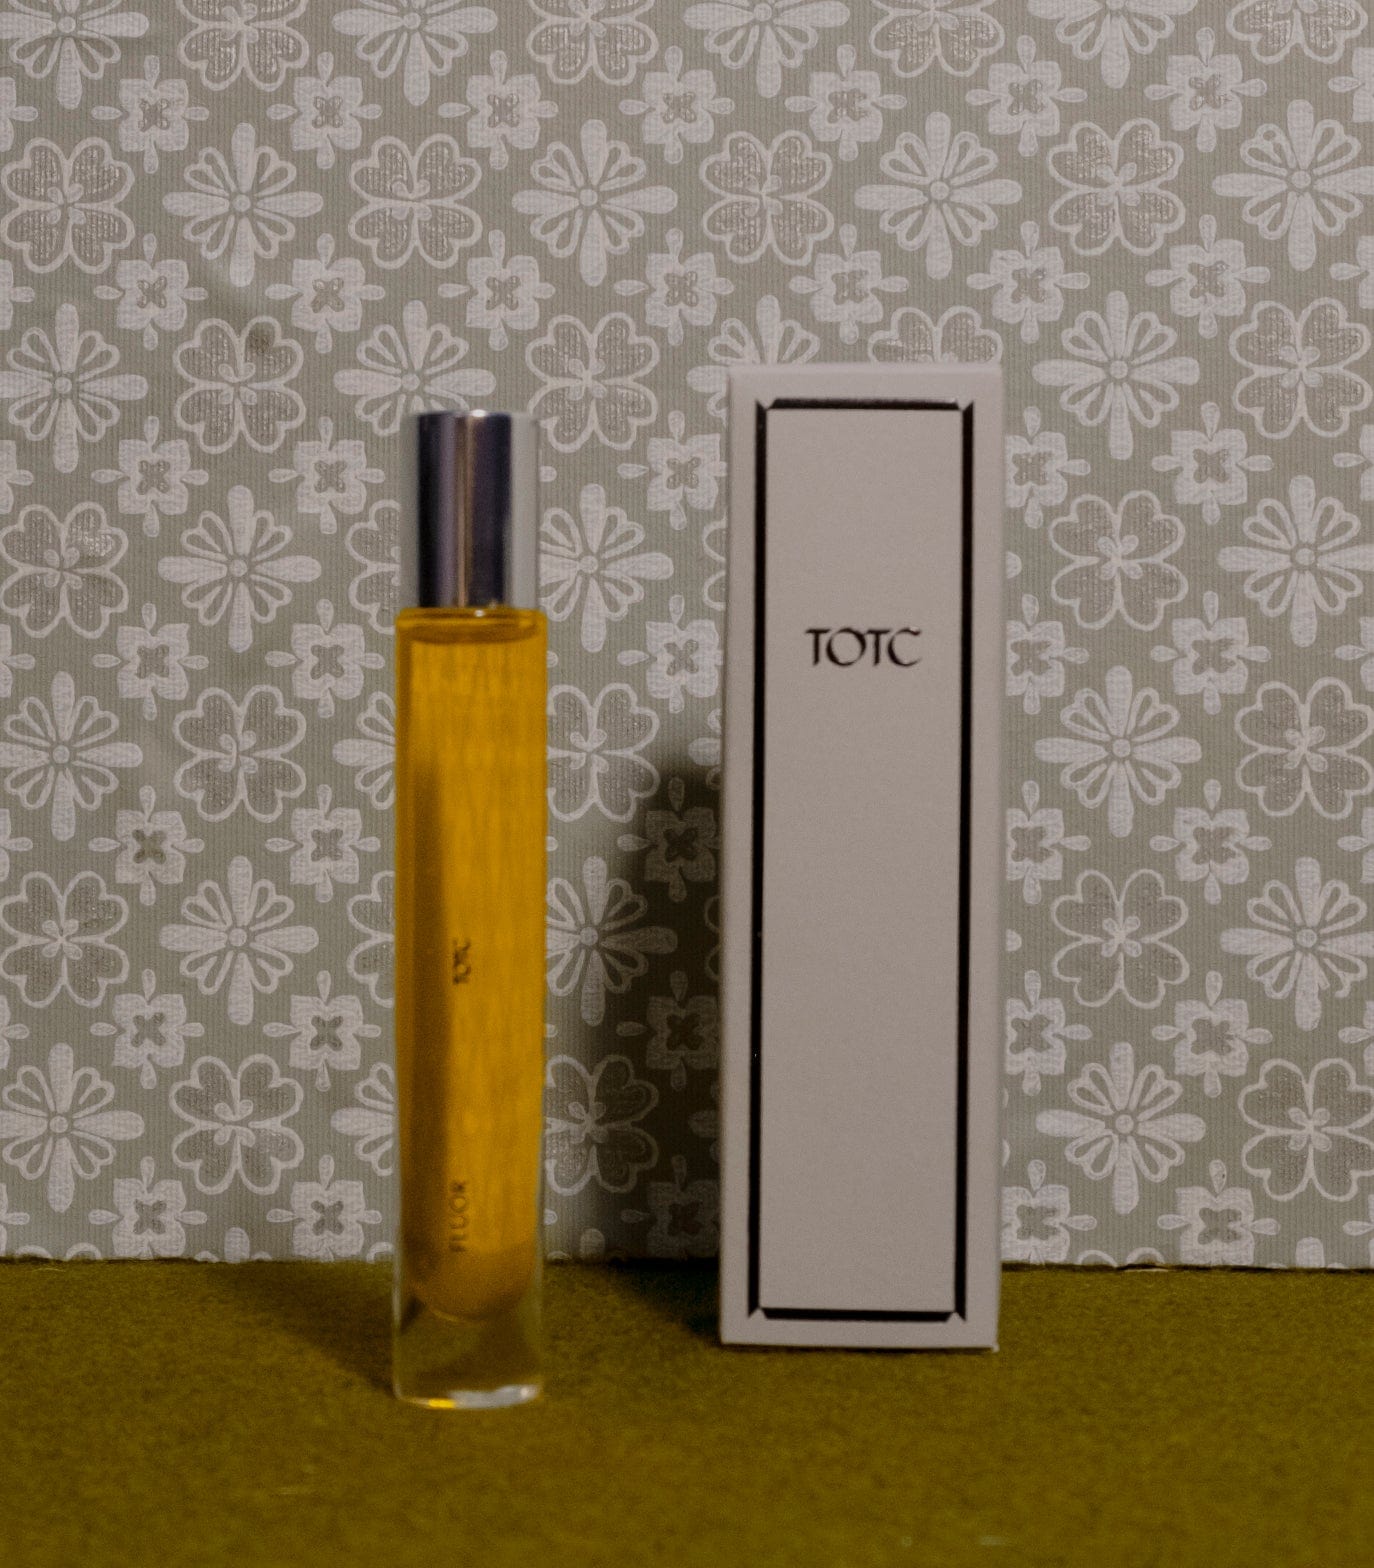 TOTC Pocket Perfume - Atkis sunja link - canada